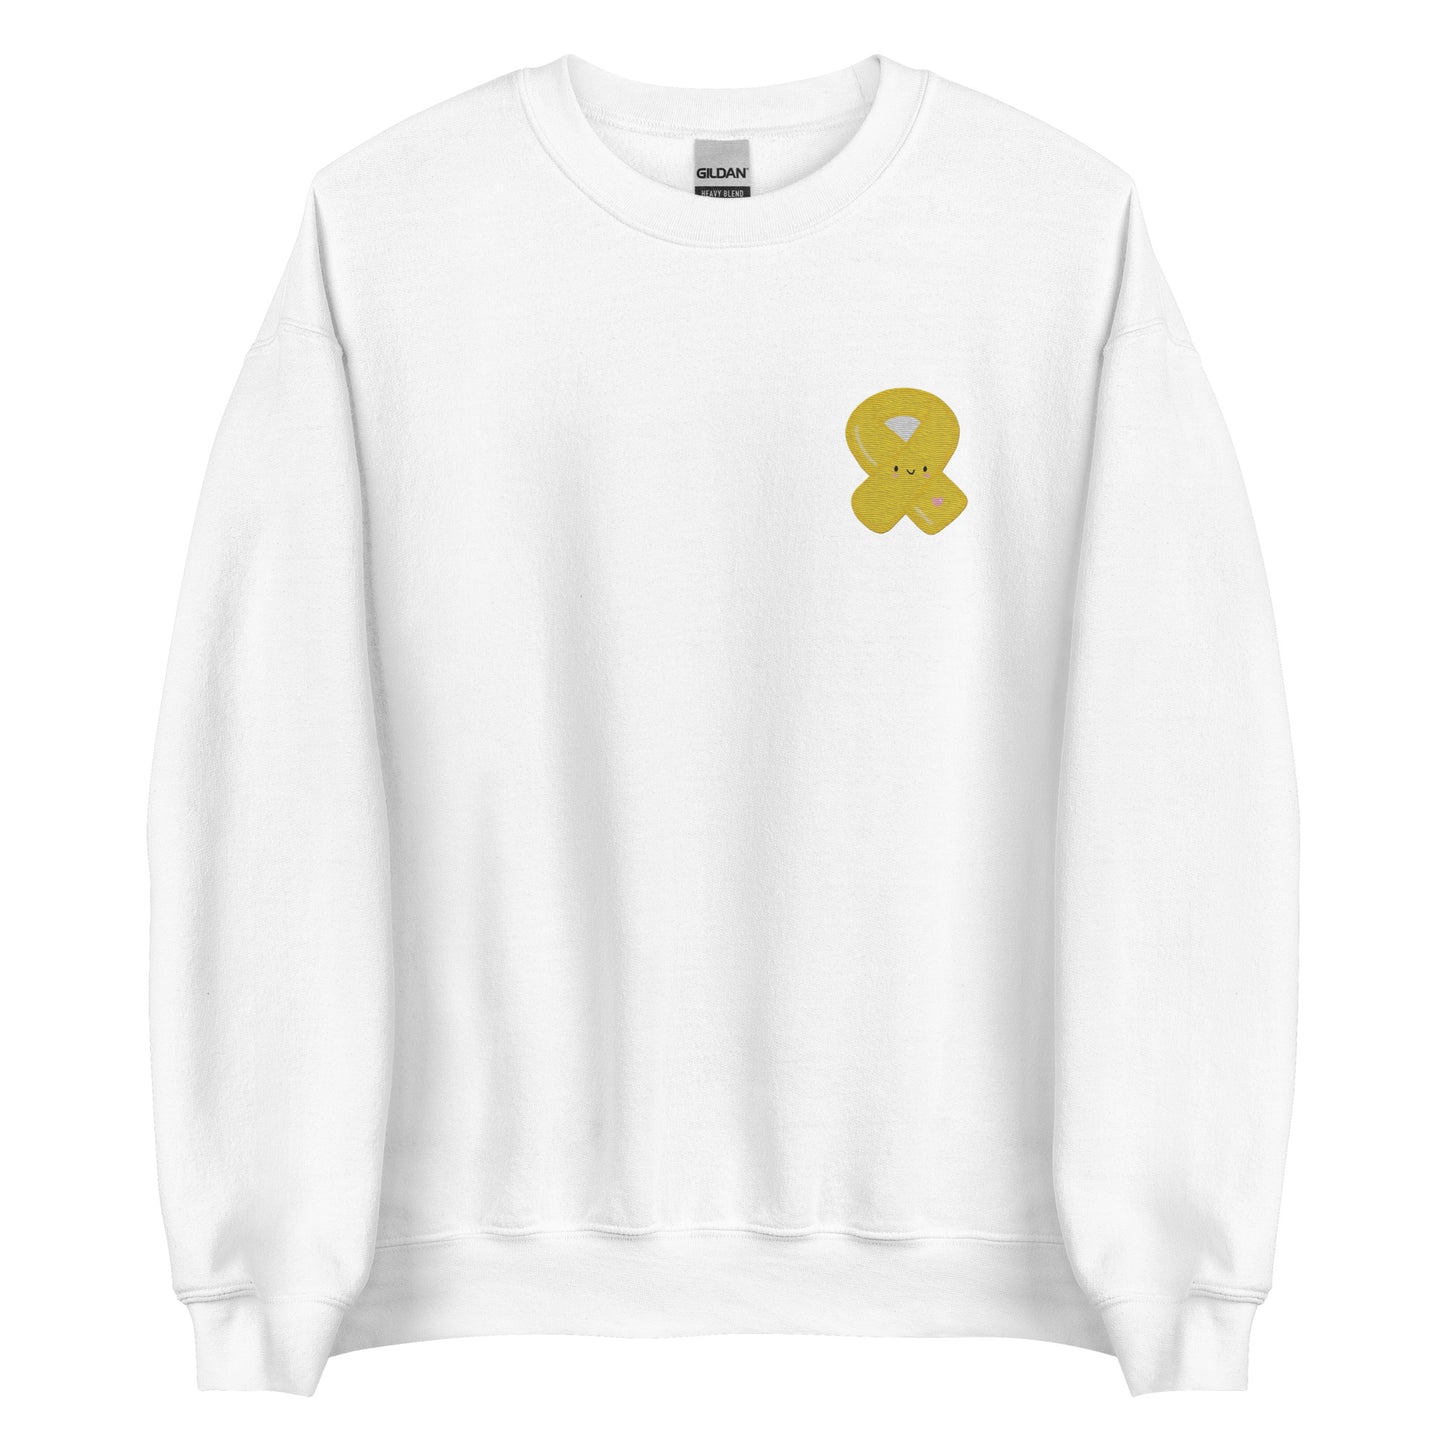 GOLD RIBBON Embroidered Unisex Sweatshirt